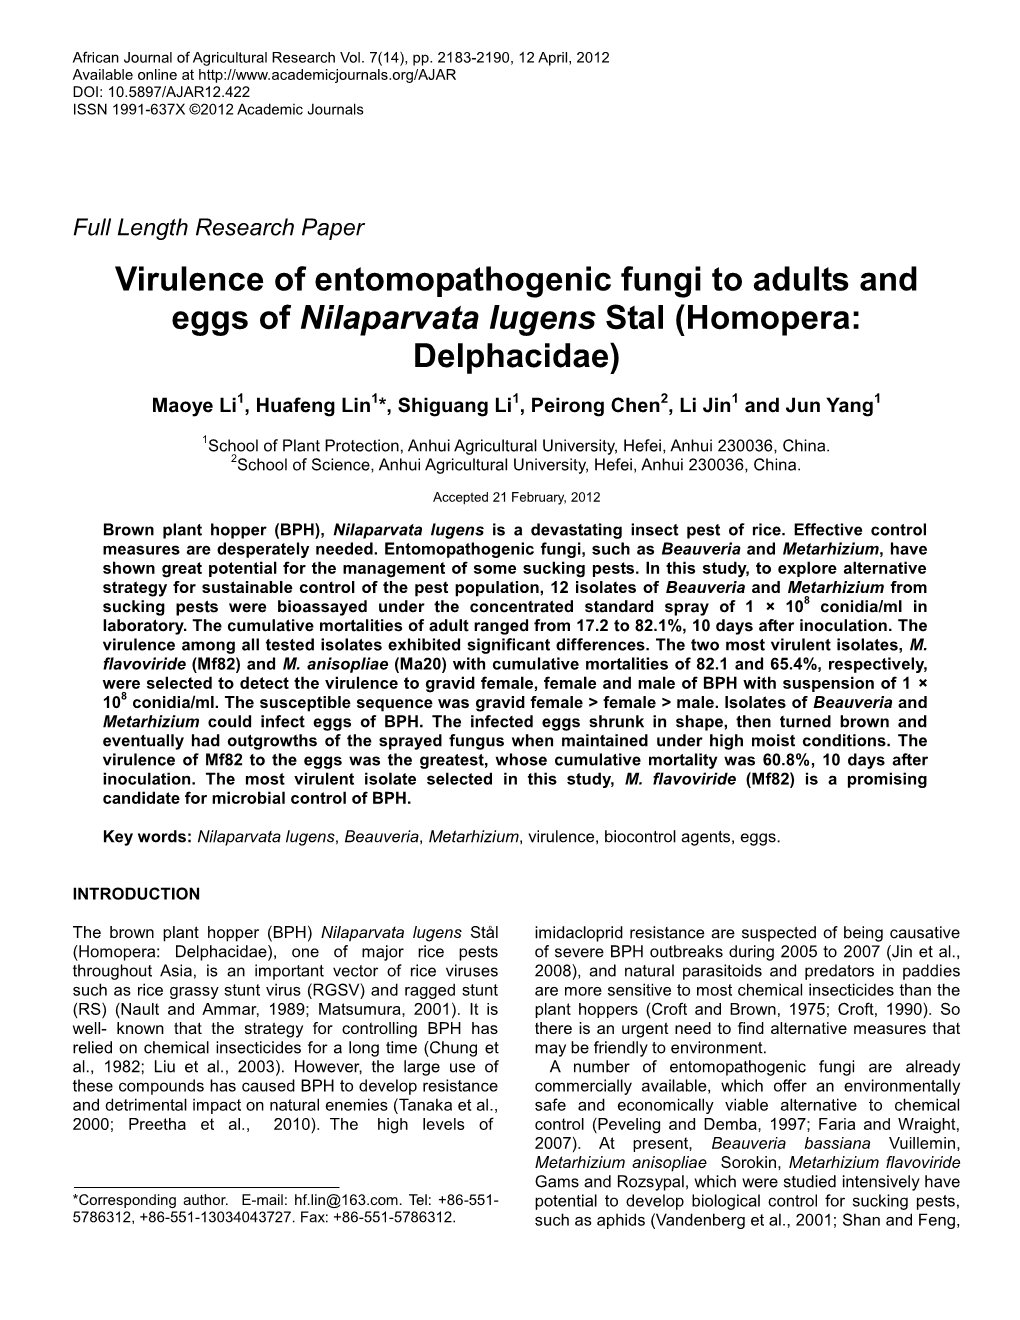 Virulence of Entomopathogenic Fungi to Adults and Eggs of Nilaparvata Lugens Stal (Homopera: Delphacidae)